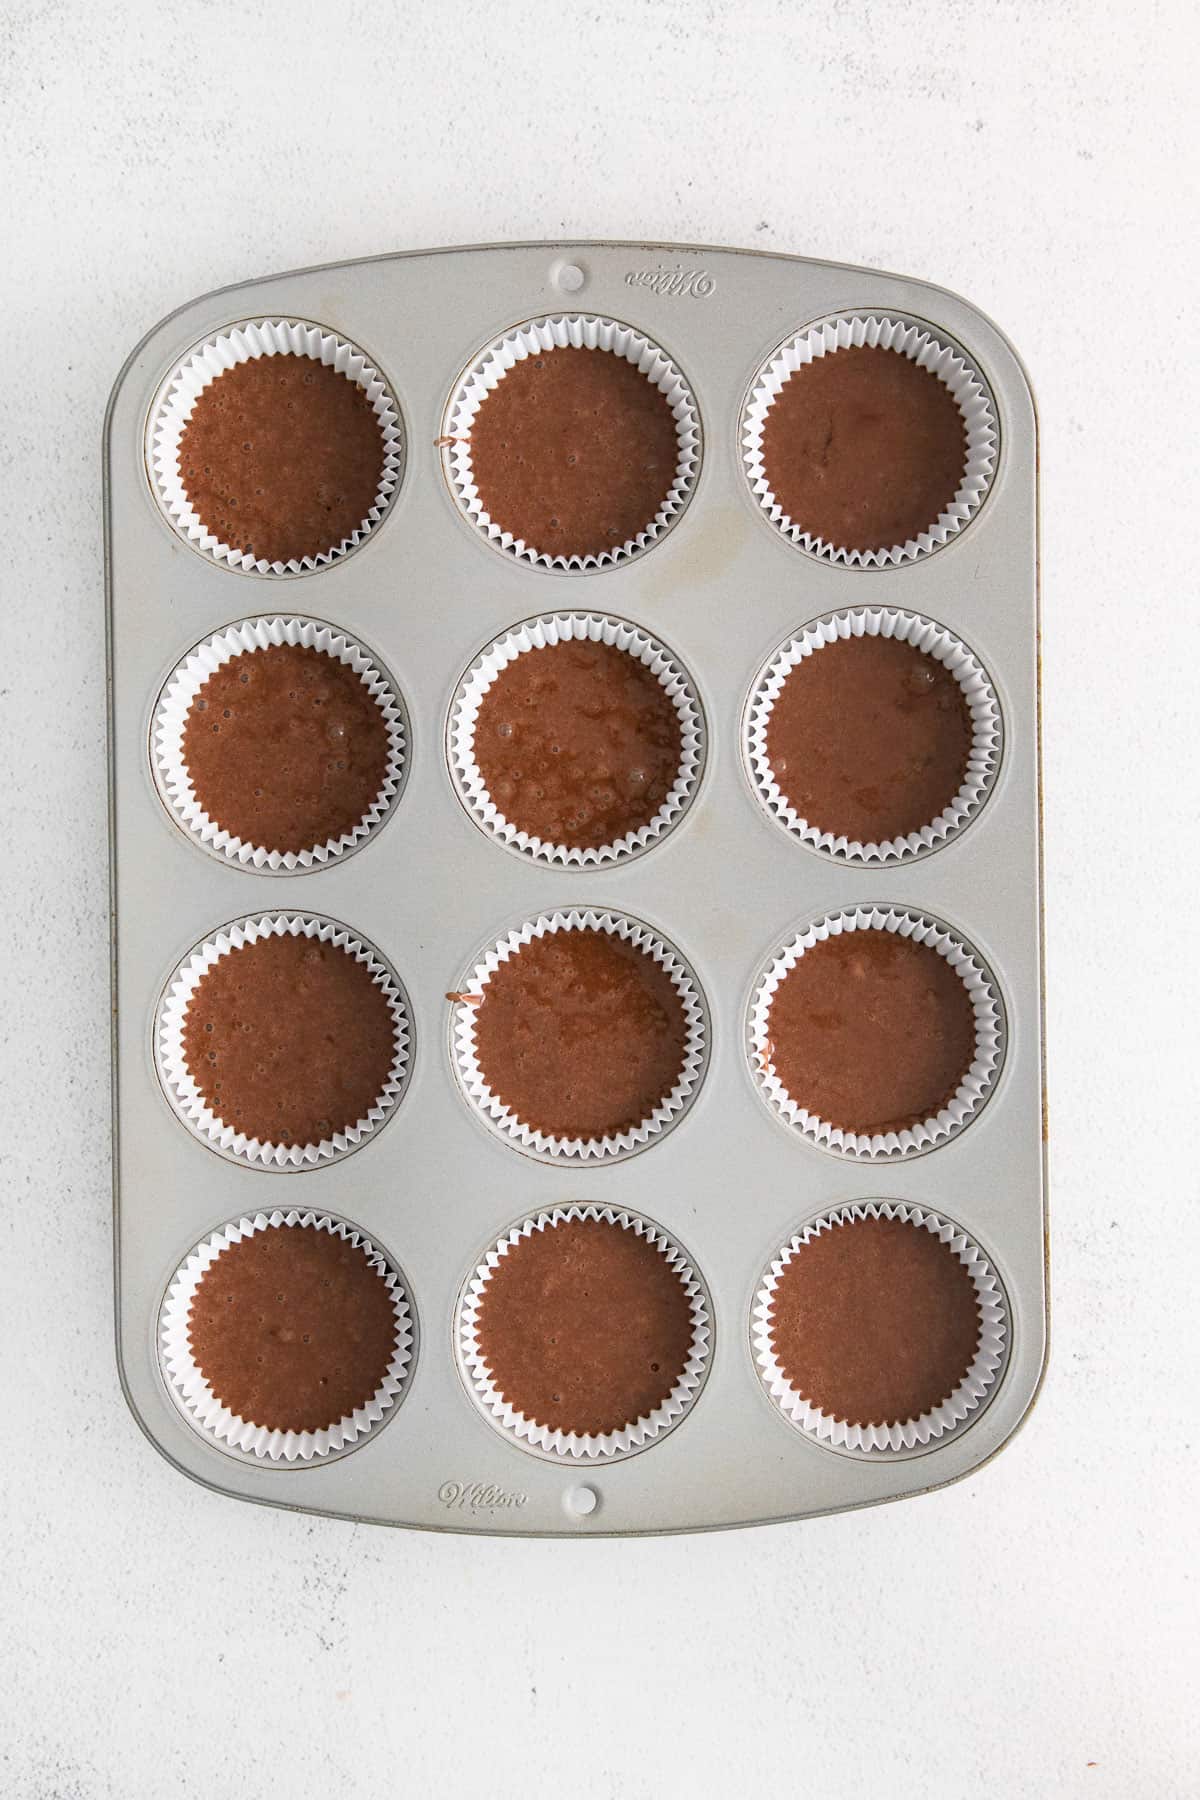 chocolate cake batter in a muffin tin.